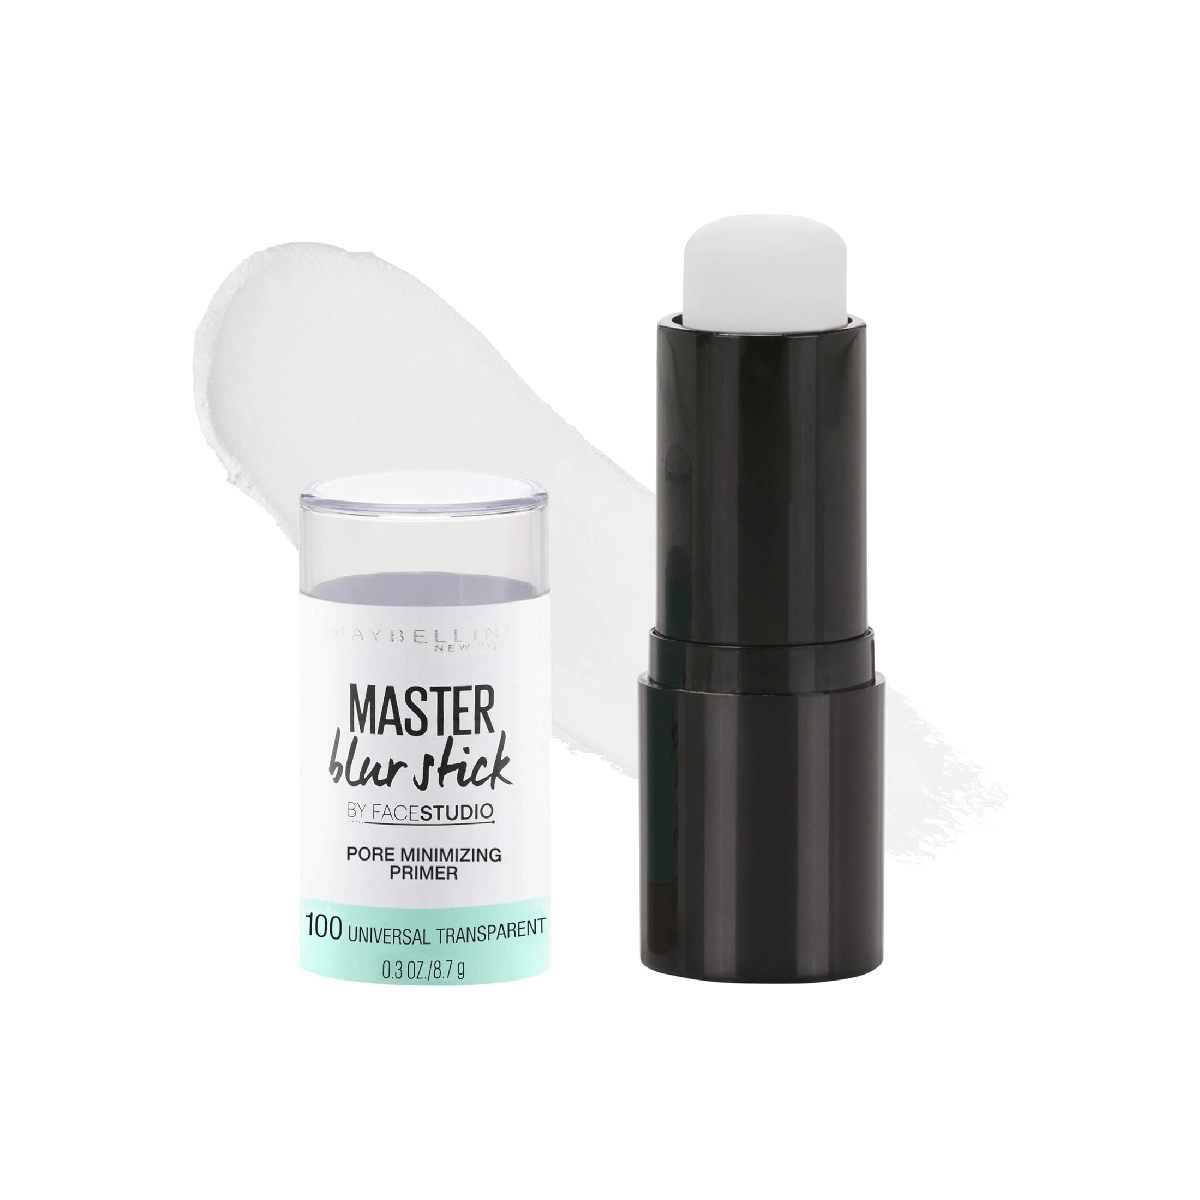 Maybelline Master Blur Primer Stick - a primer stick product on a white background.